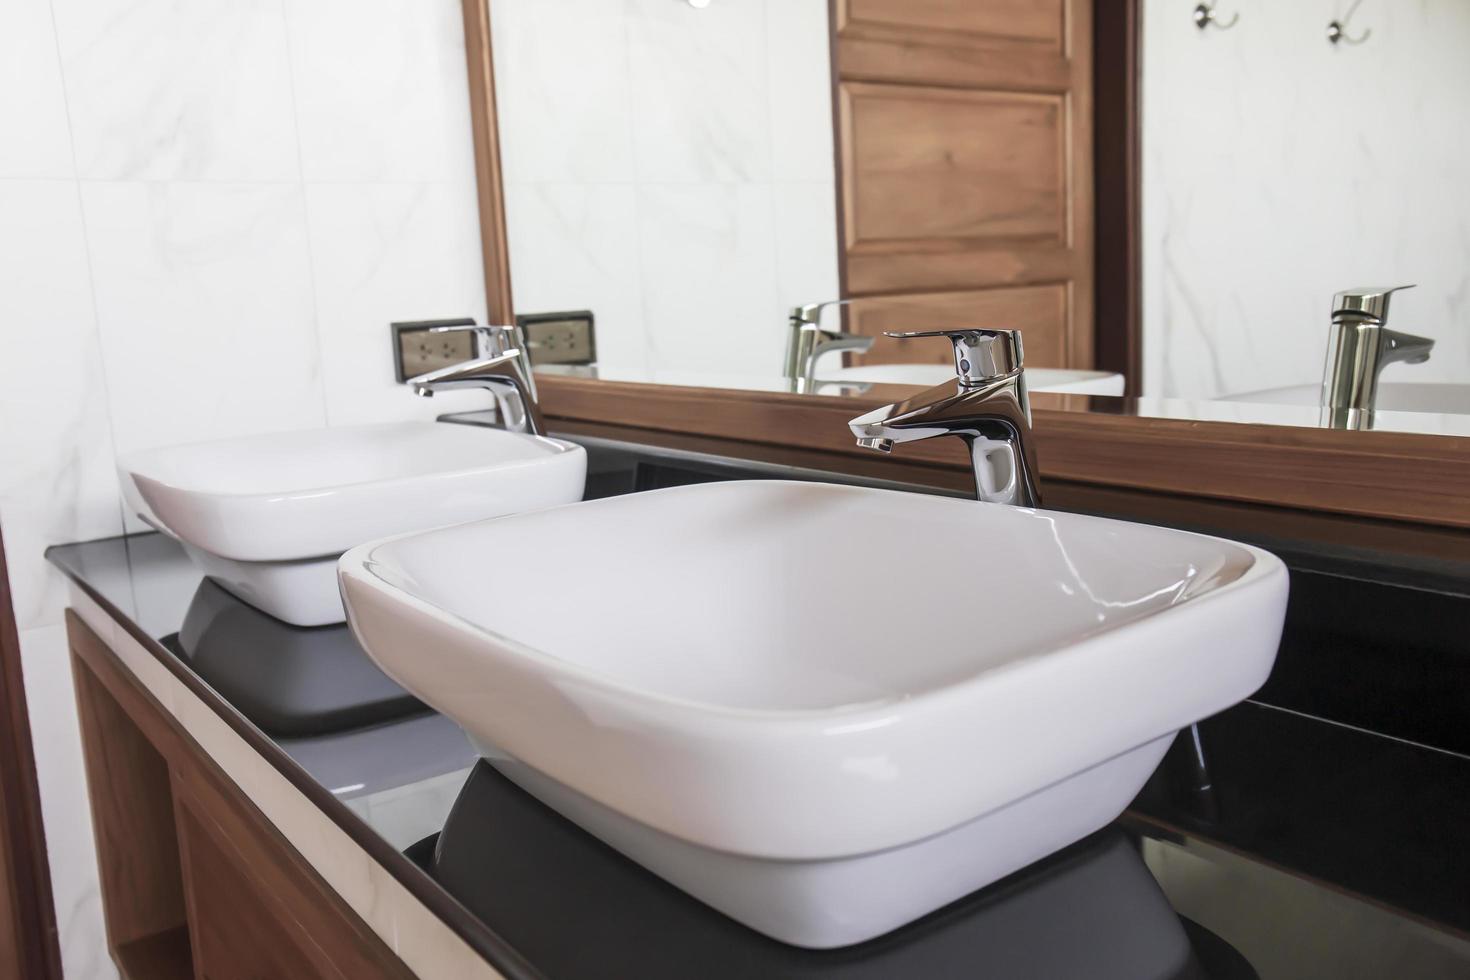 Stainless steel sanitary ware, elegant hand wash basin. photo